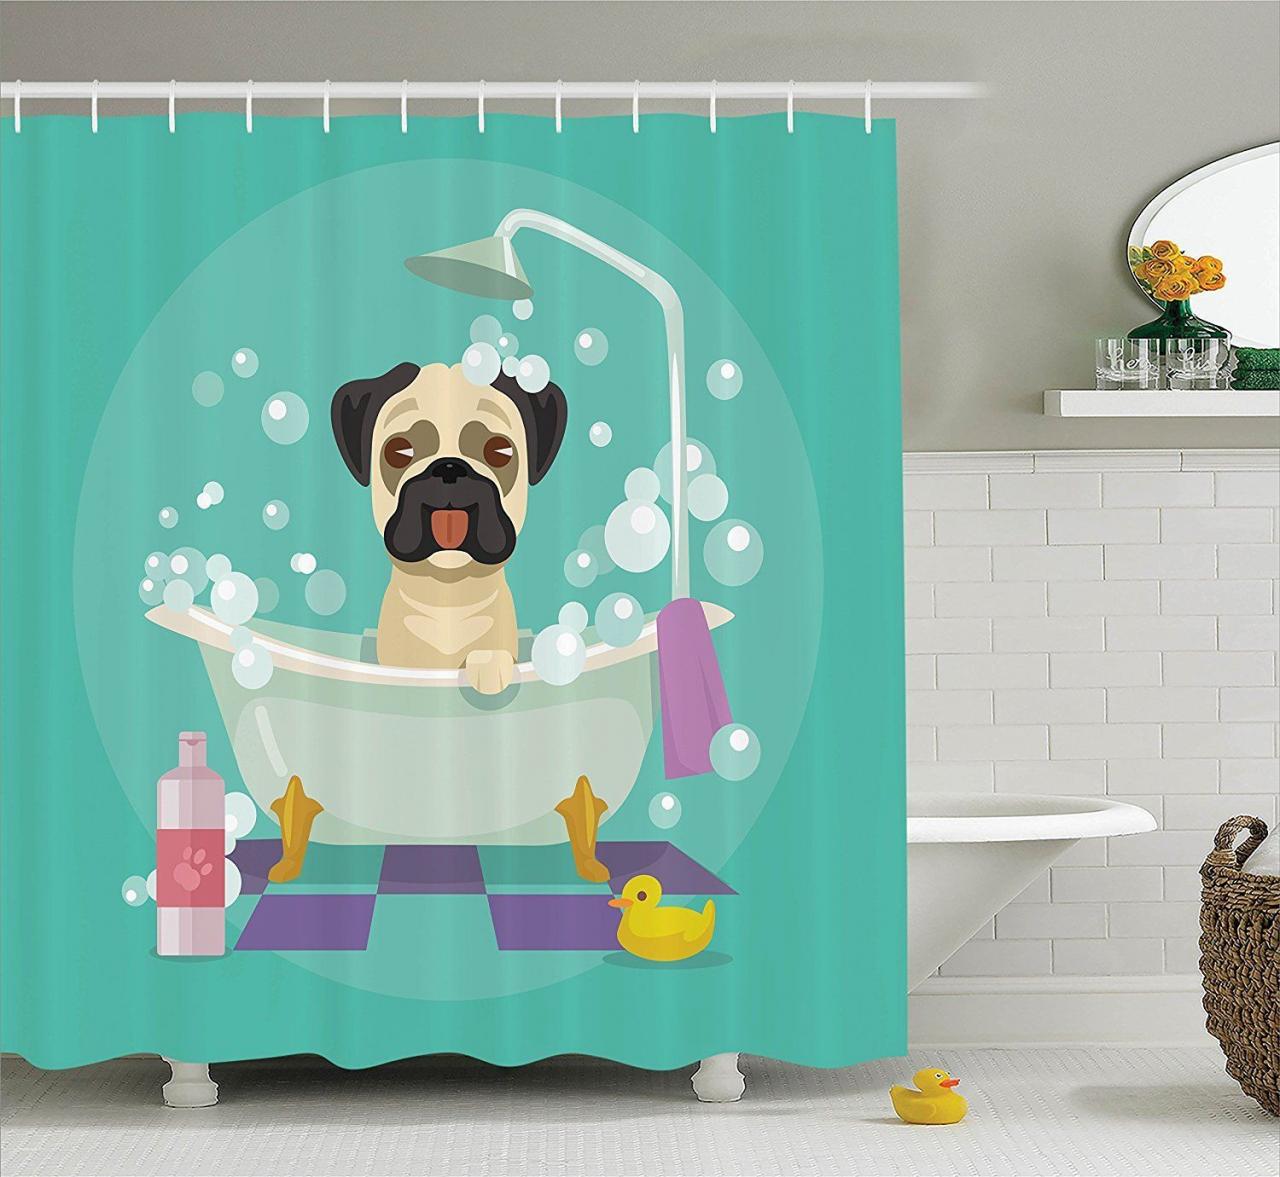 Cute Pug Dog Taking A Bath In A Bathtub Waterproof Shower Curtain Pug